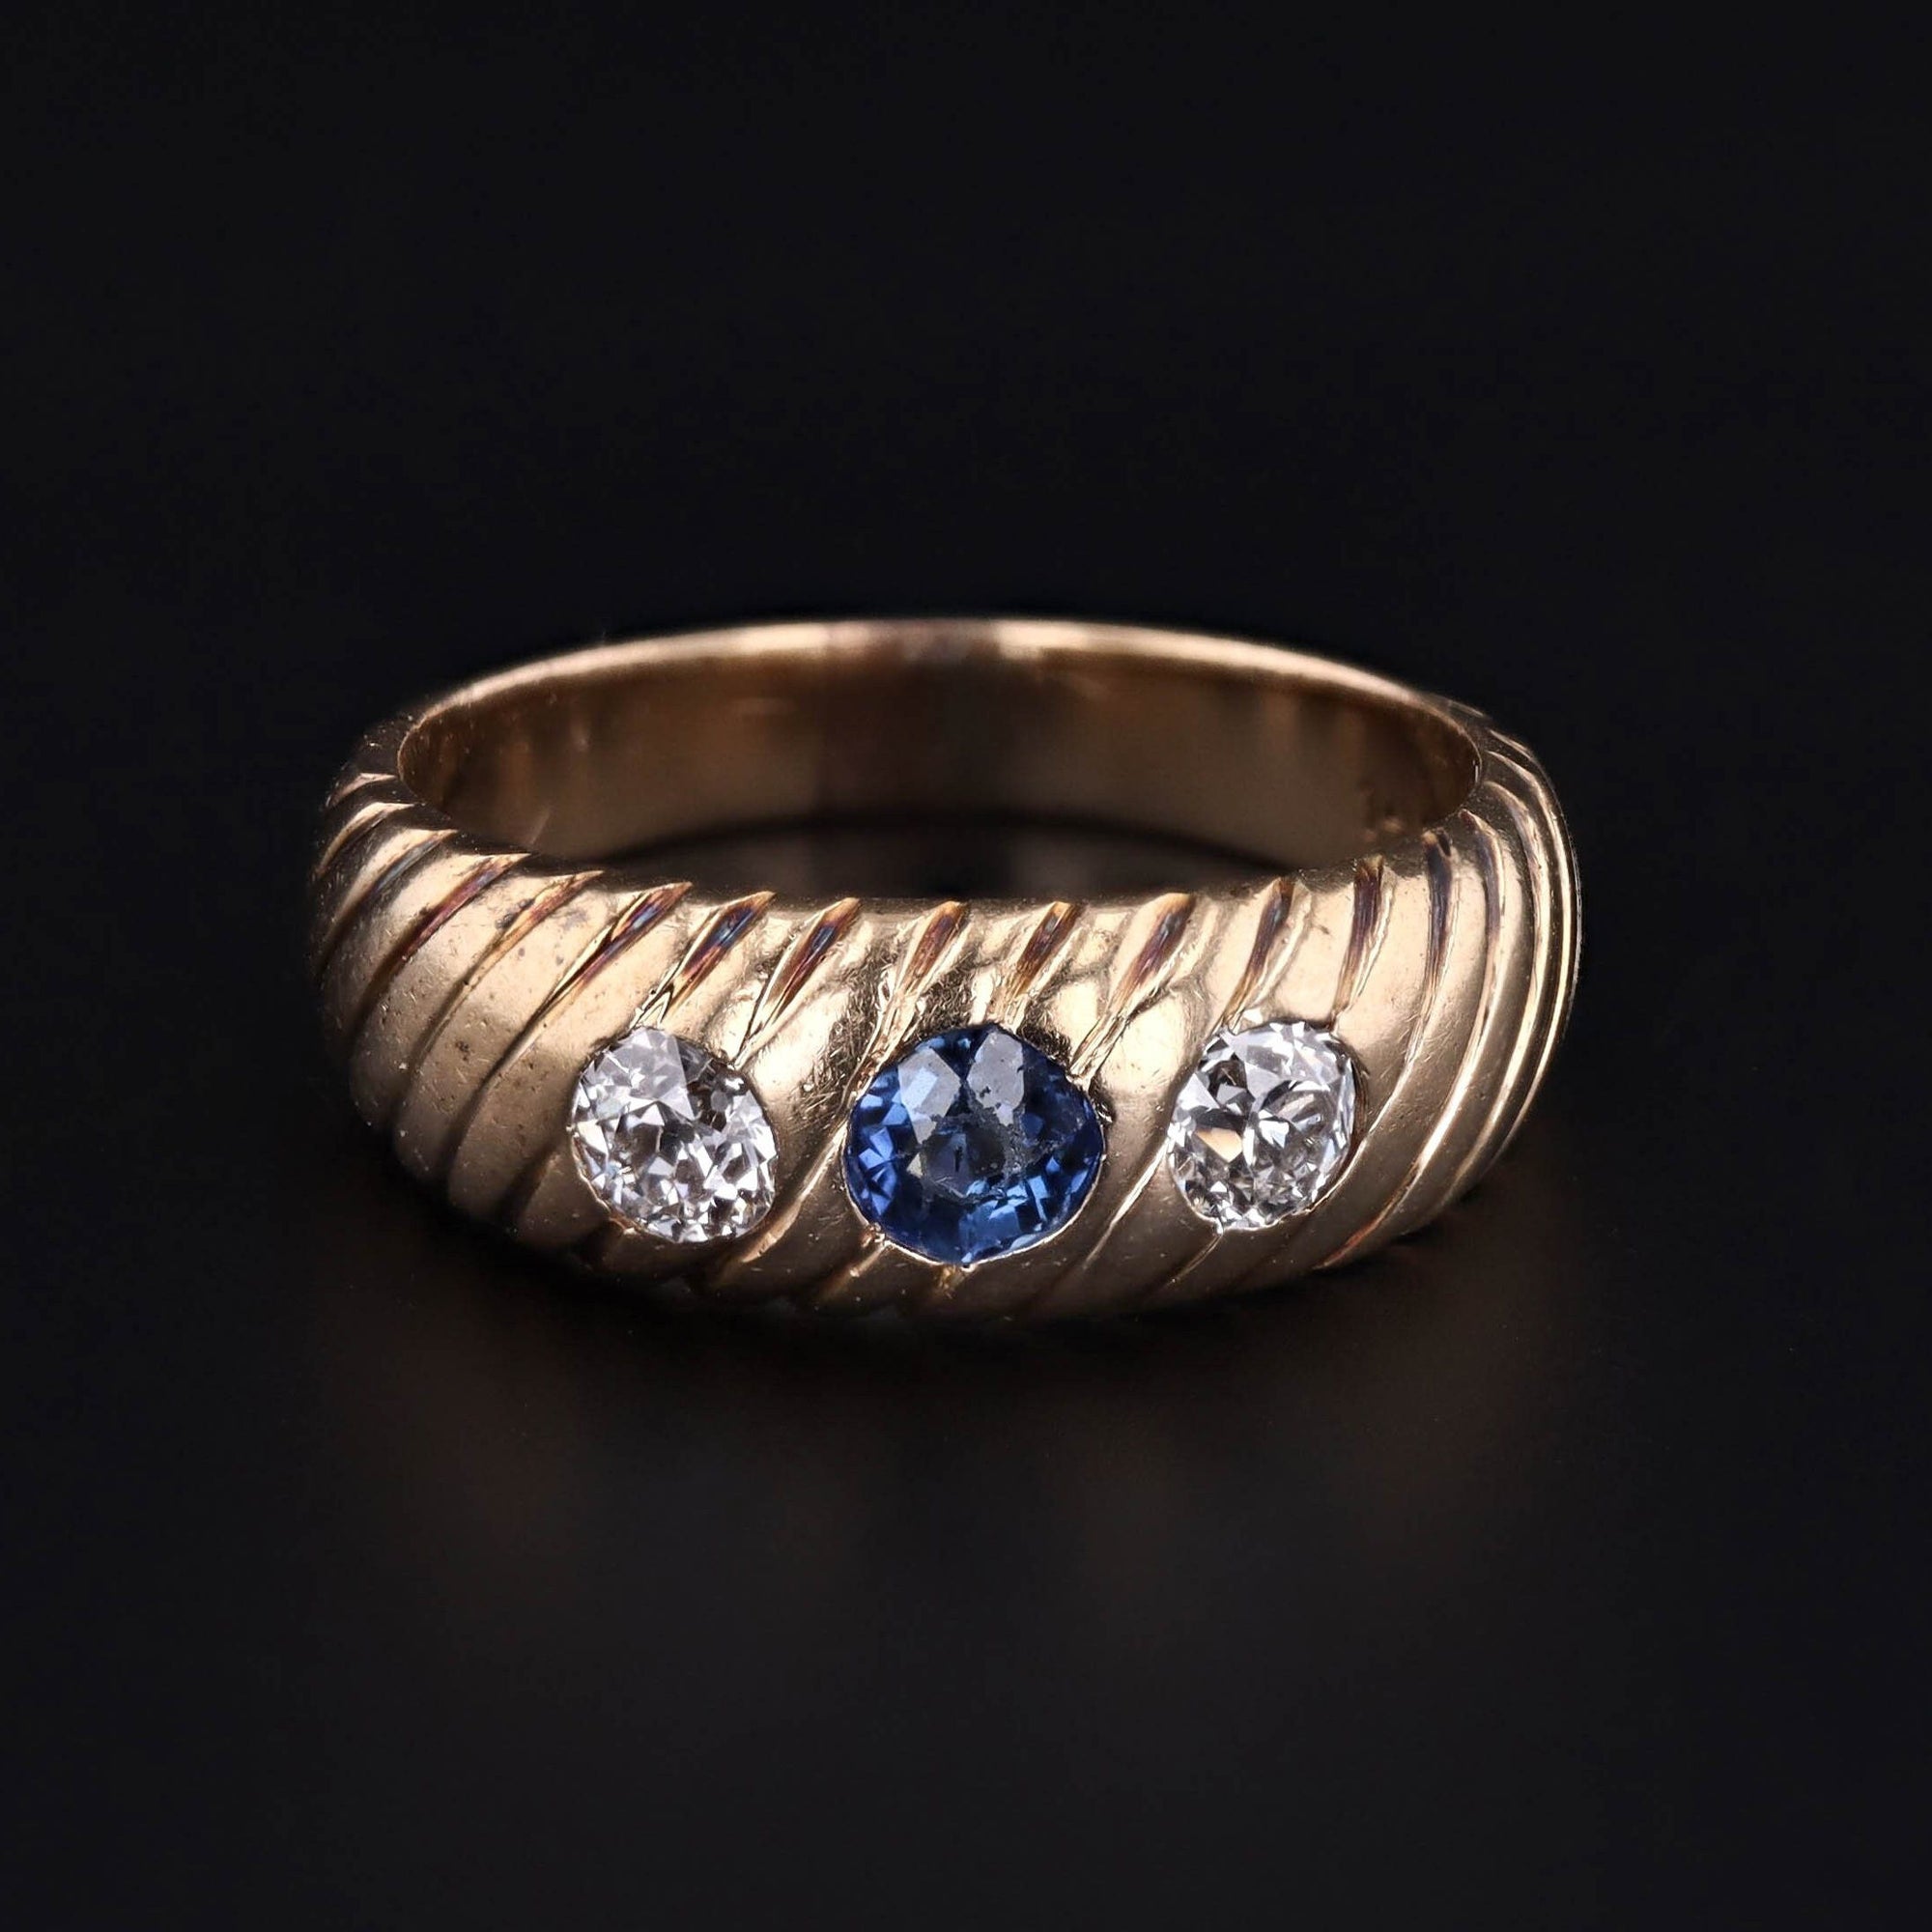 Antique Sapphire & Diamond Ring of 14k Gold